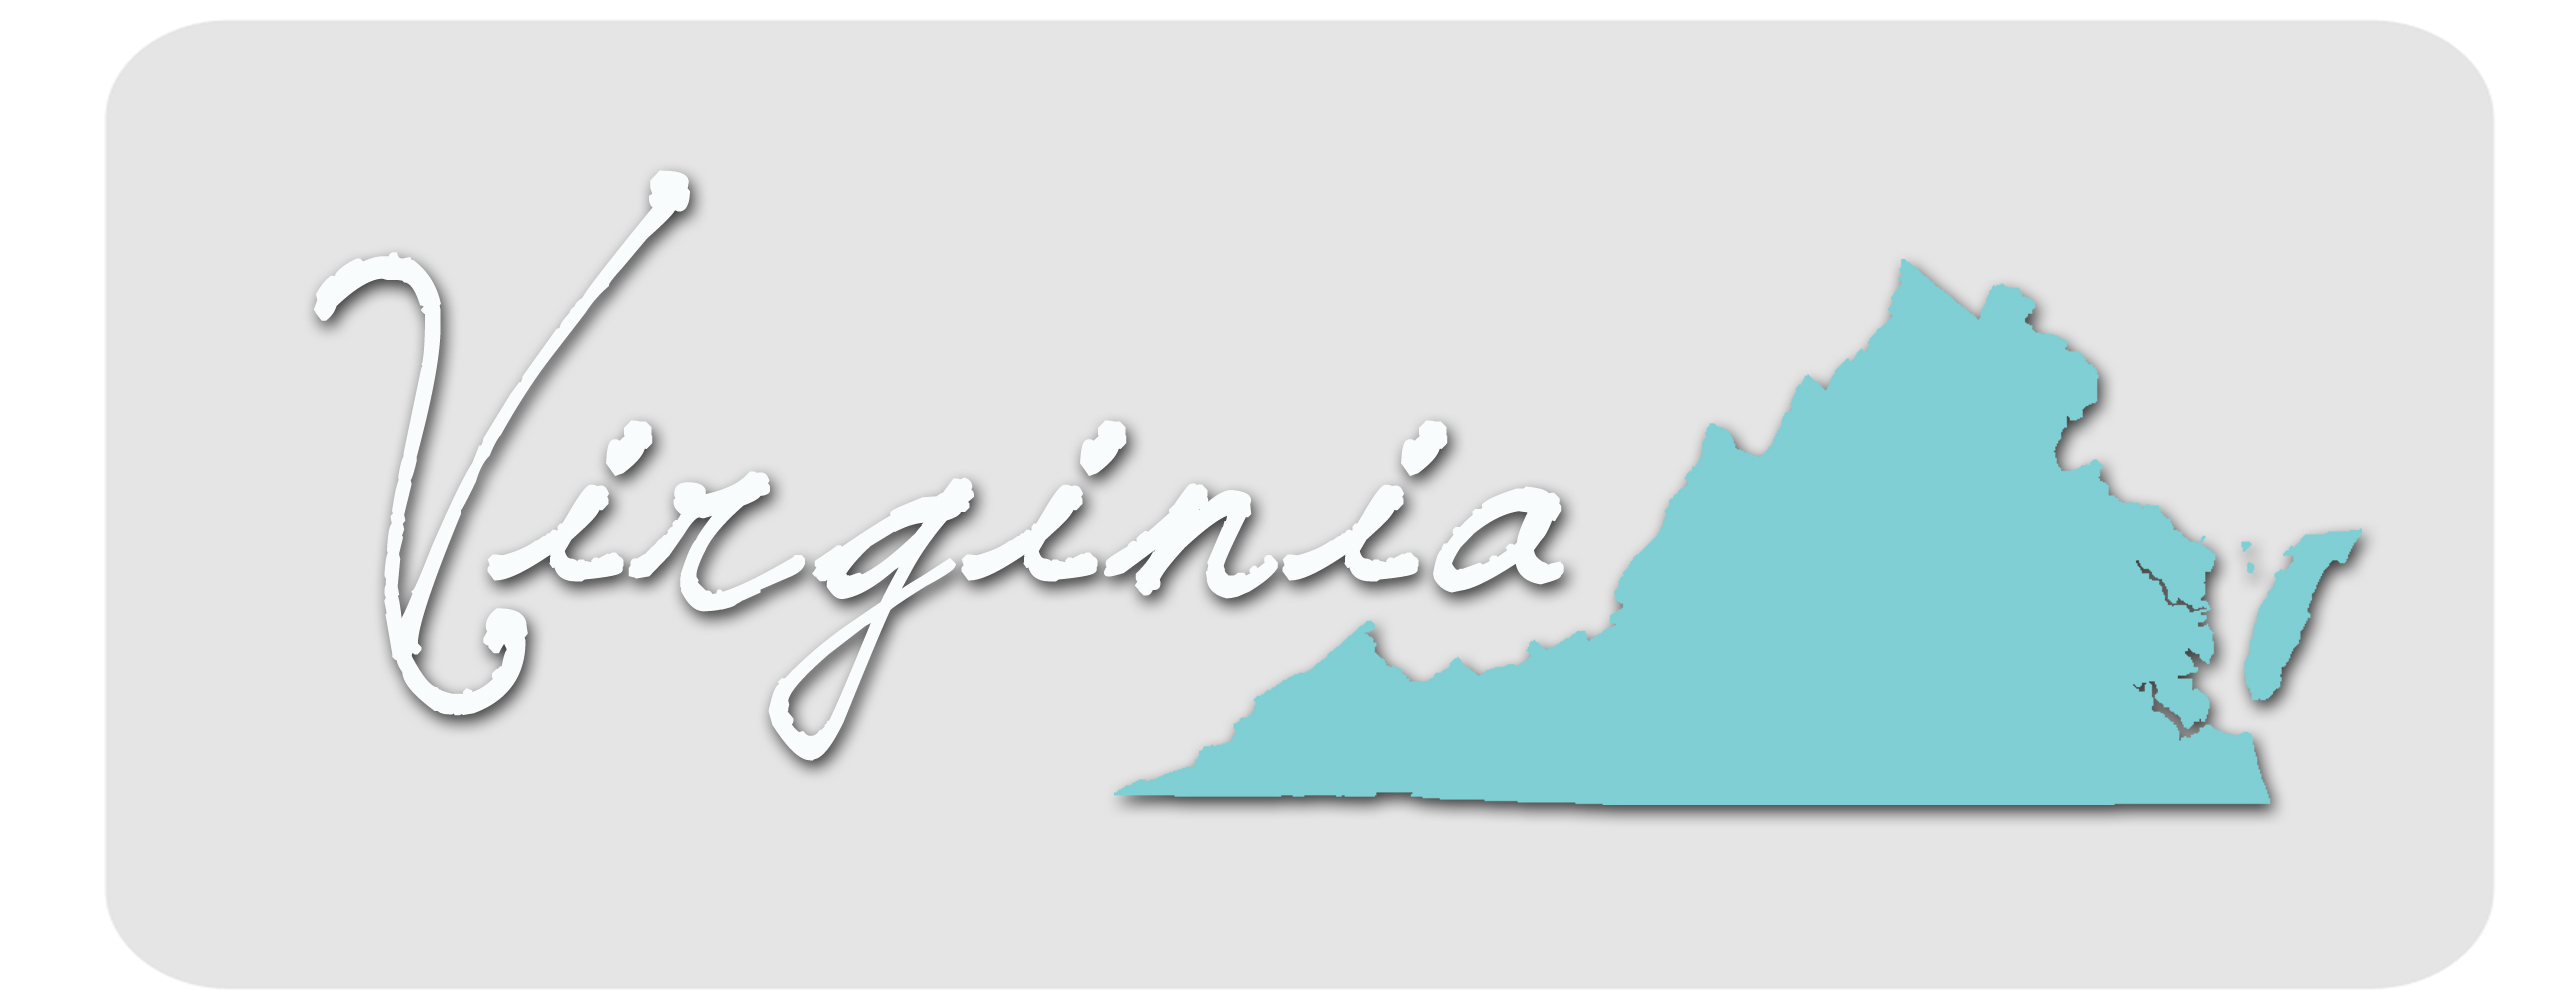 Virginia health insurance